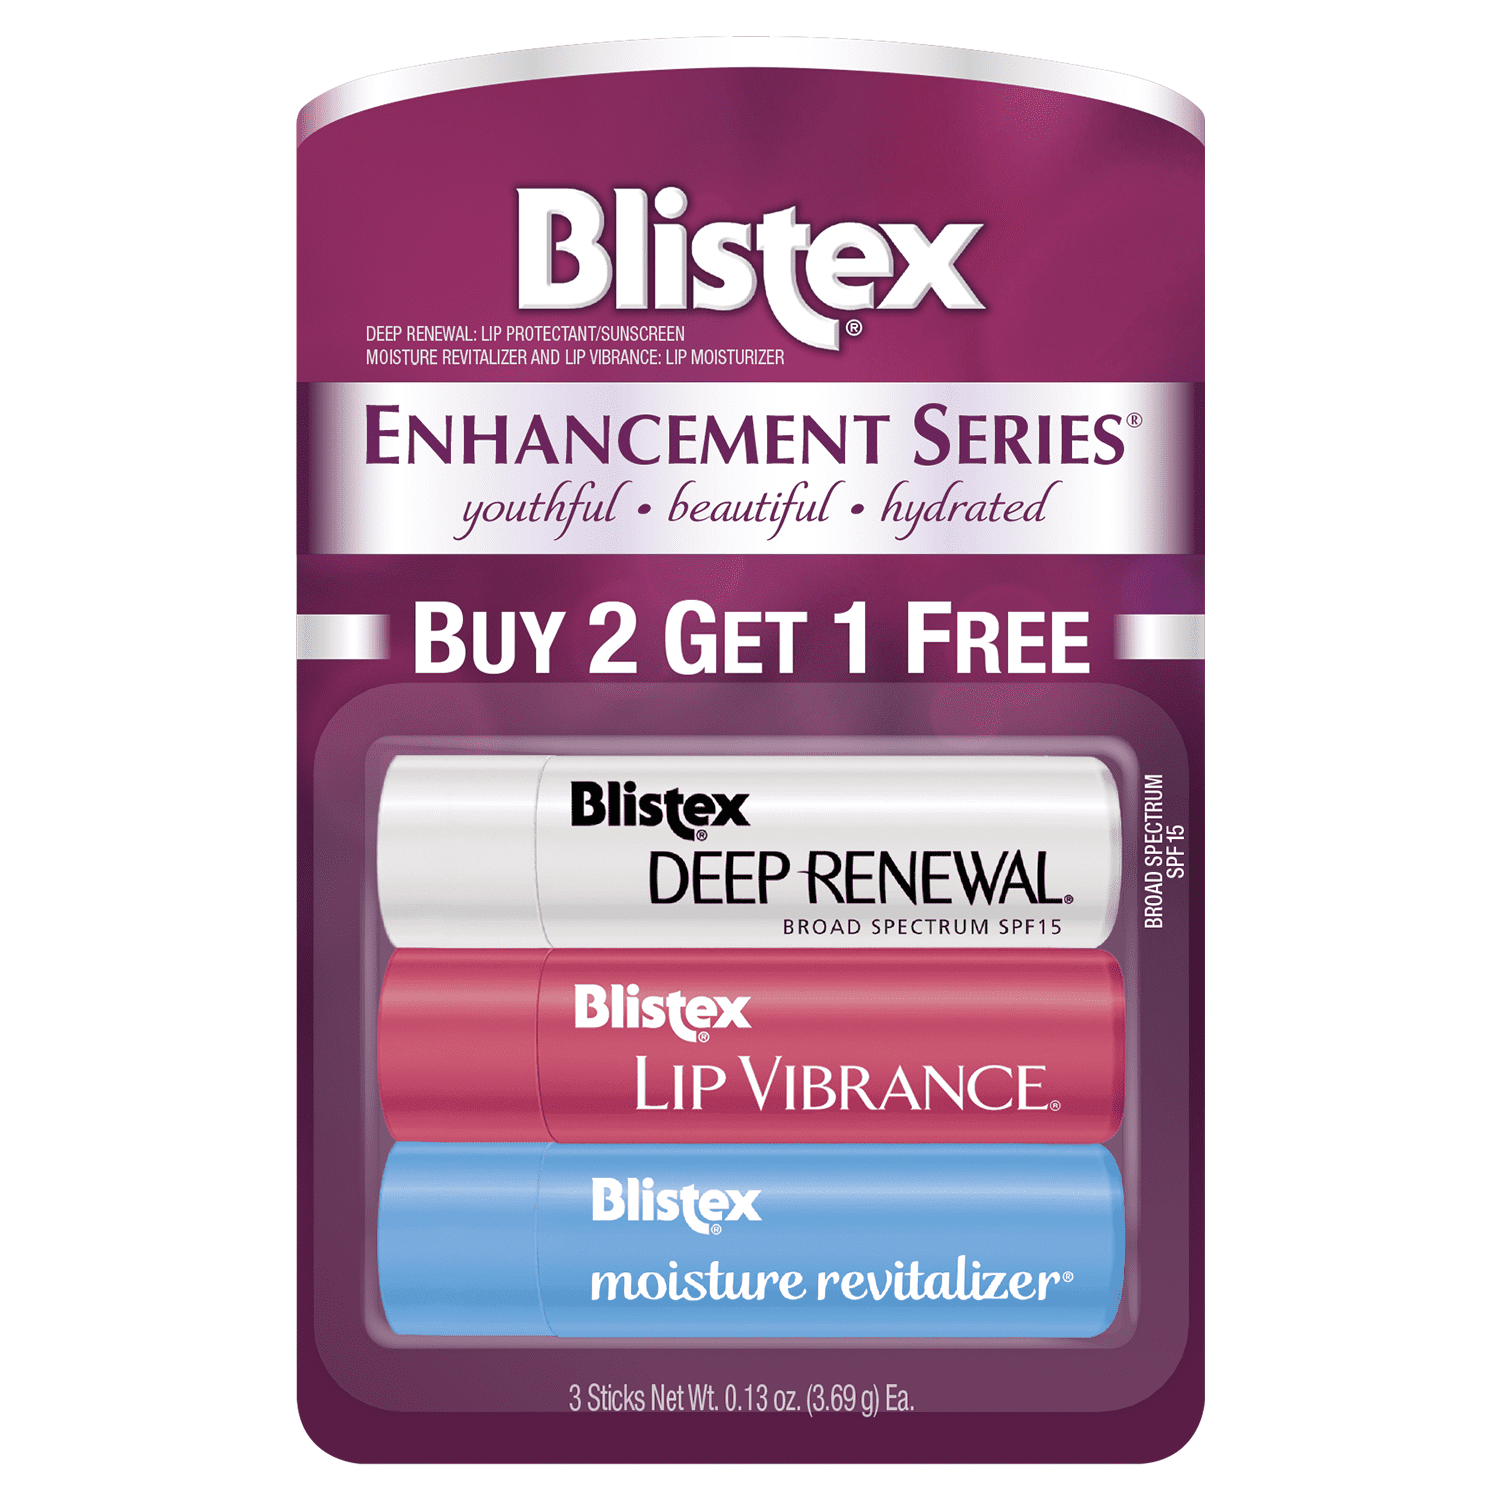 Blistex Enhancement Series Buy 2, Get 1 Free Value Pack contains three indulgent lip balms